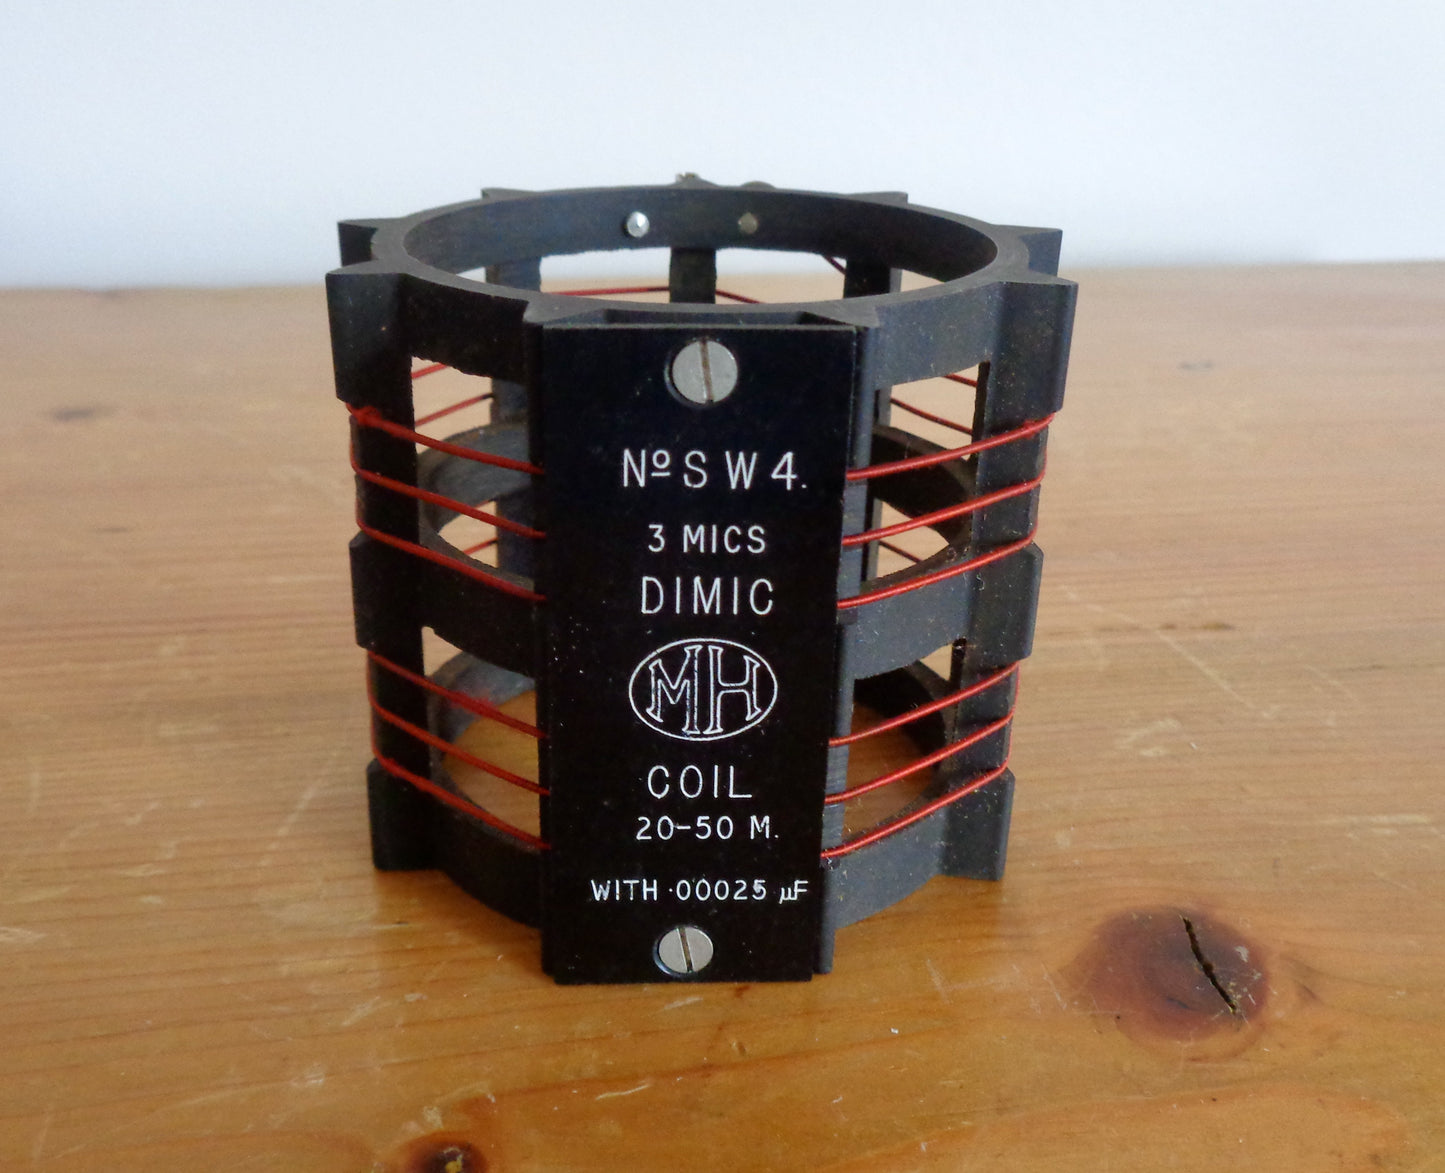 1928 McMichael Dimic Coil SW4 20-50M With 0.00025 Micro Farads In Its Original Box